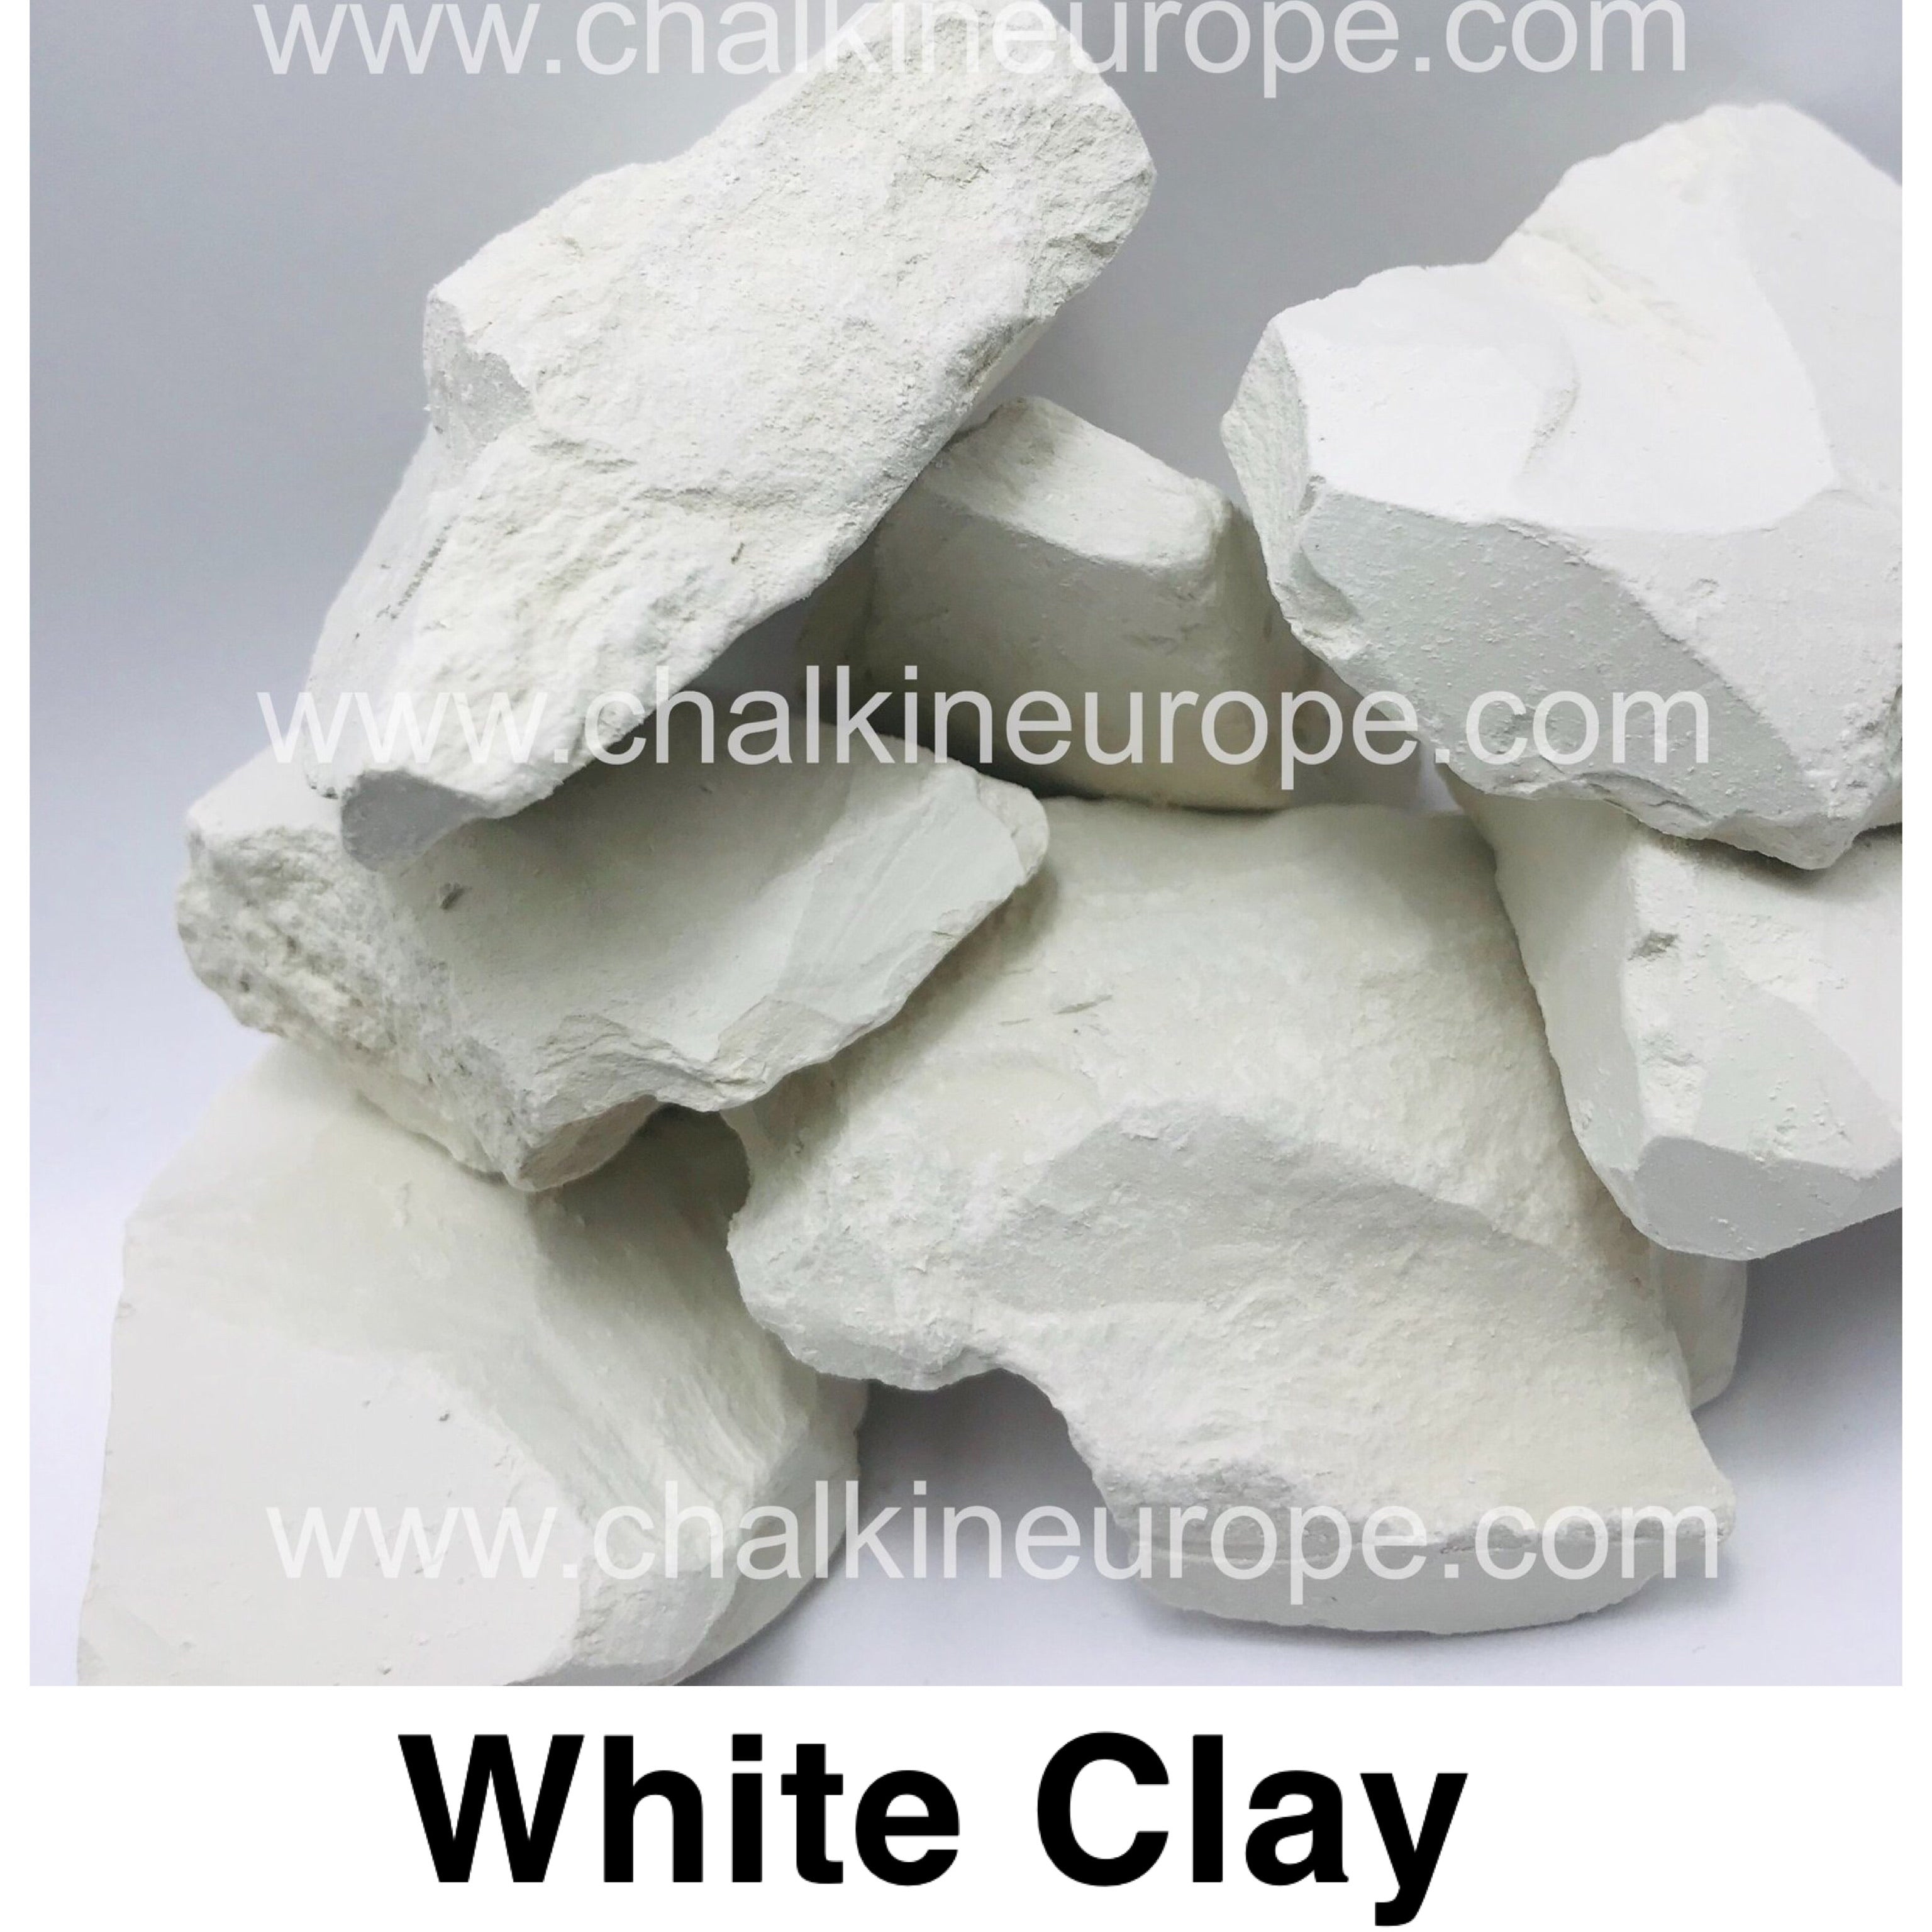 Edible white clay - Chalkineurope